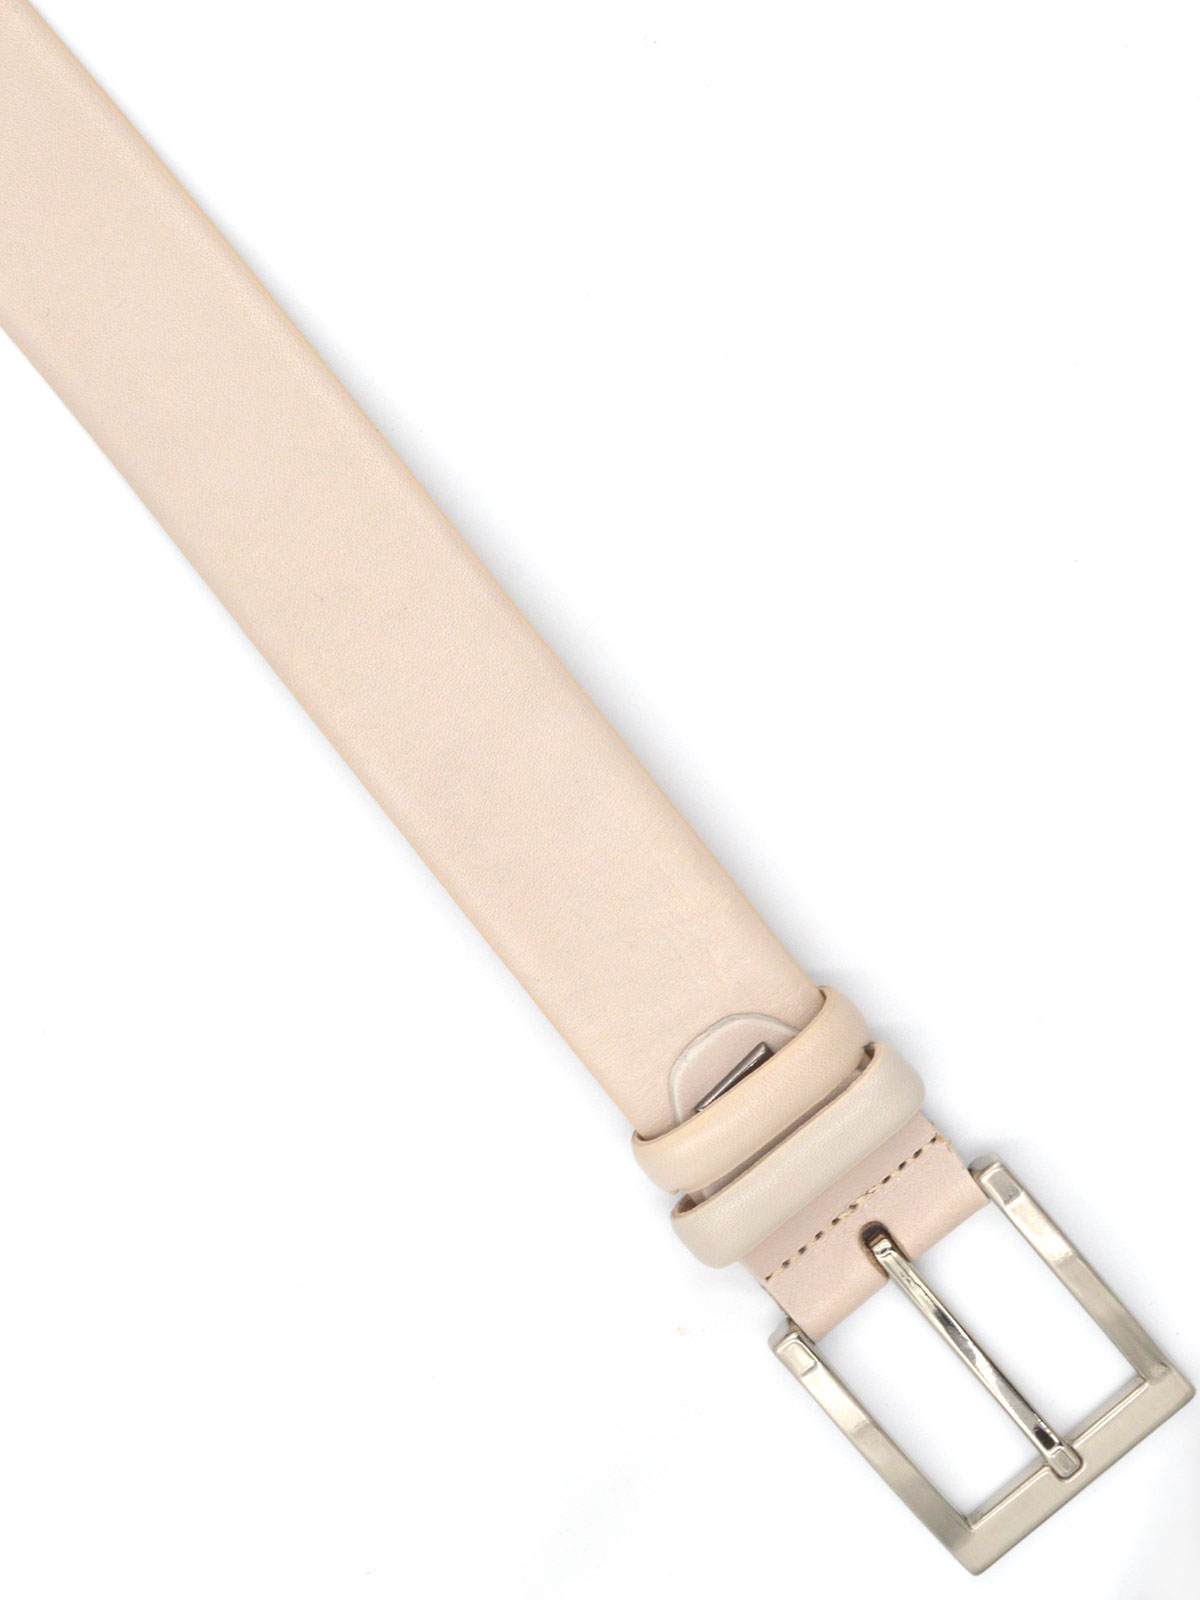 Clean genuine leather belt - 10456 - € 24.75 img3